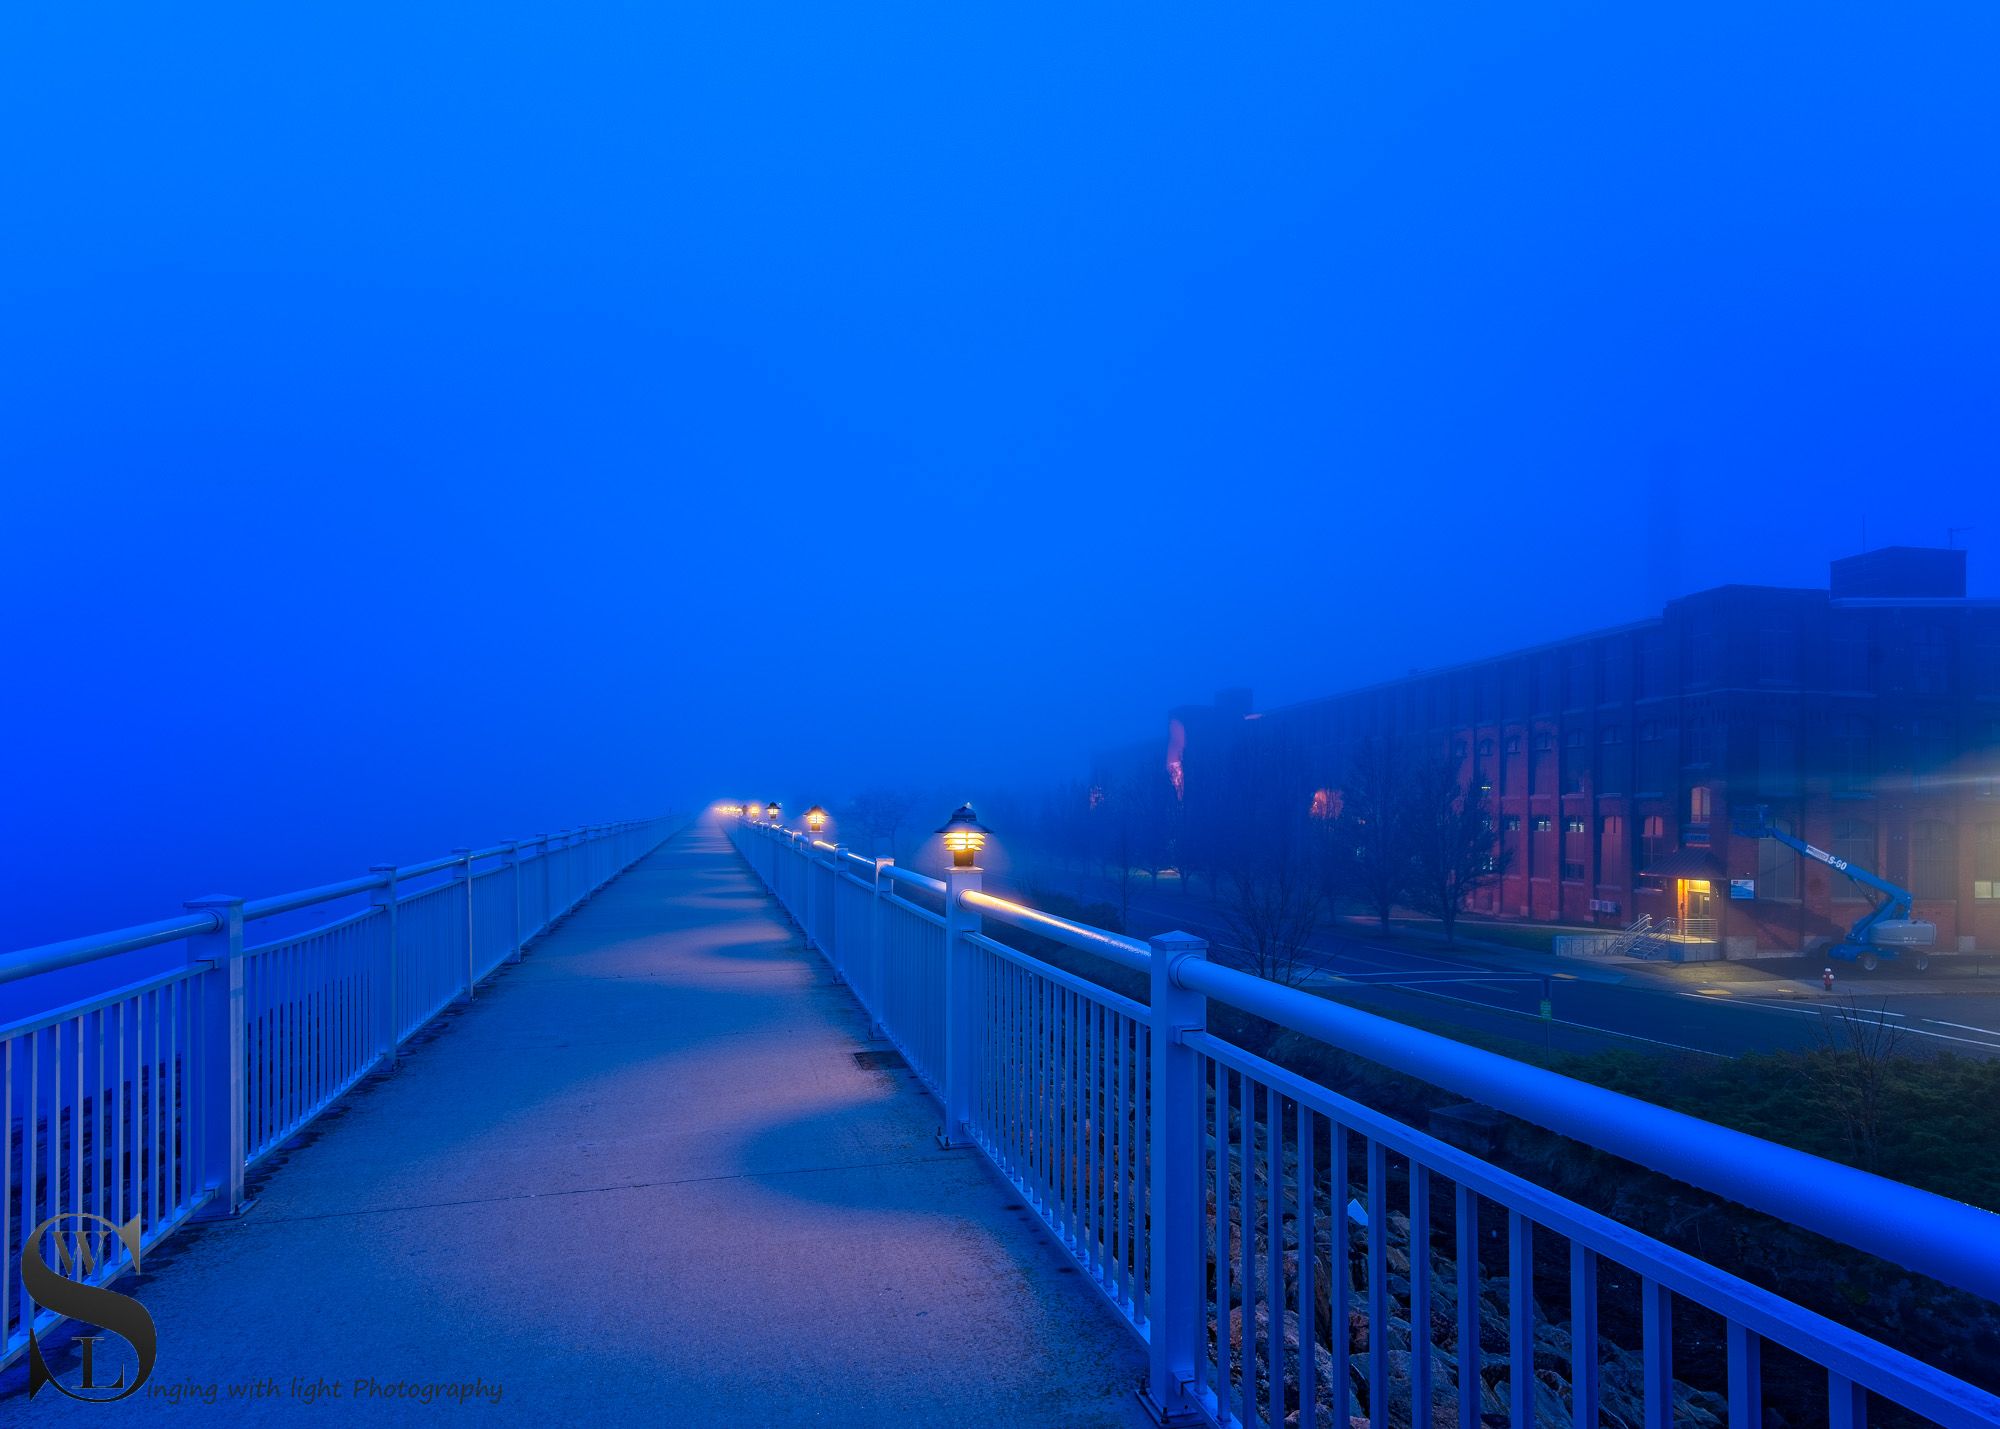 harbpr walk foggy-5.jpg